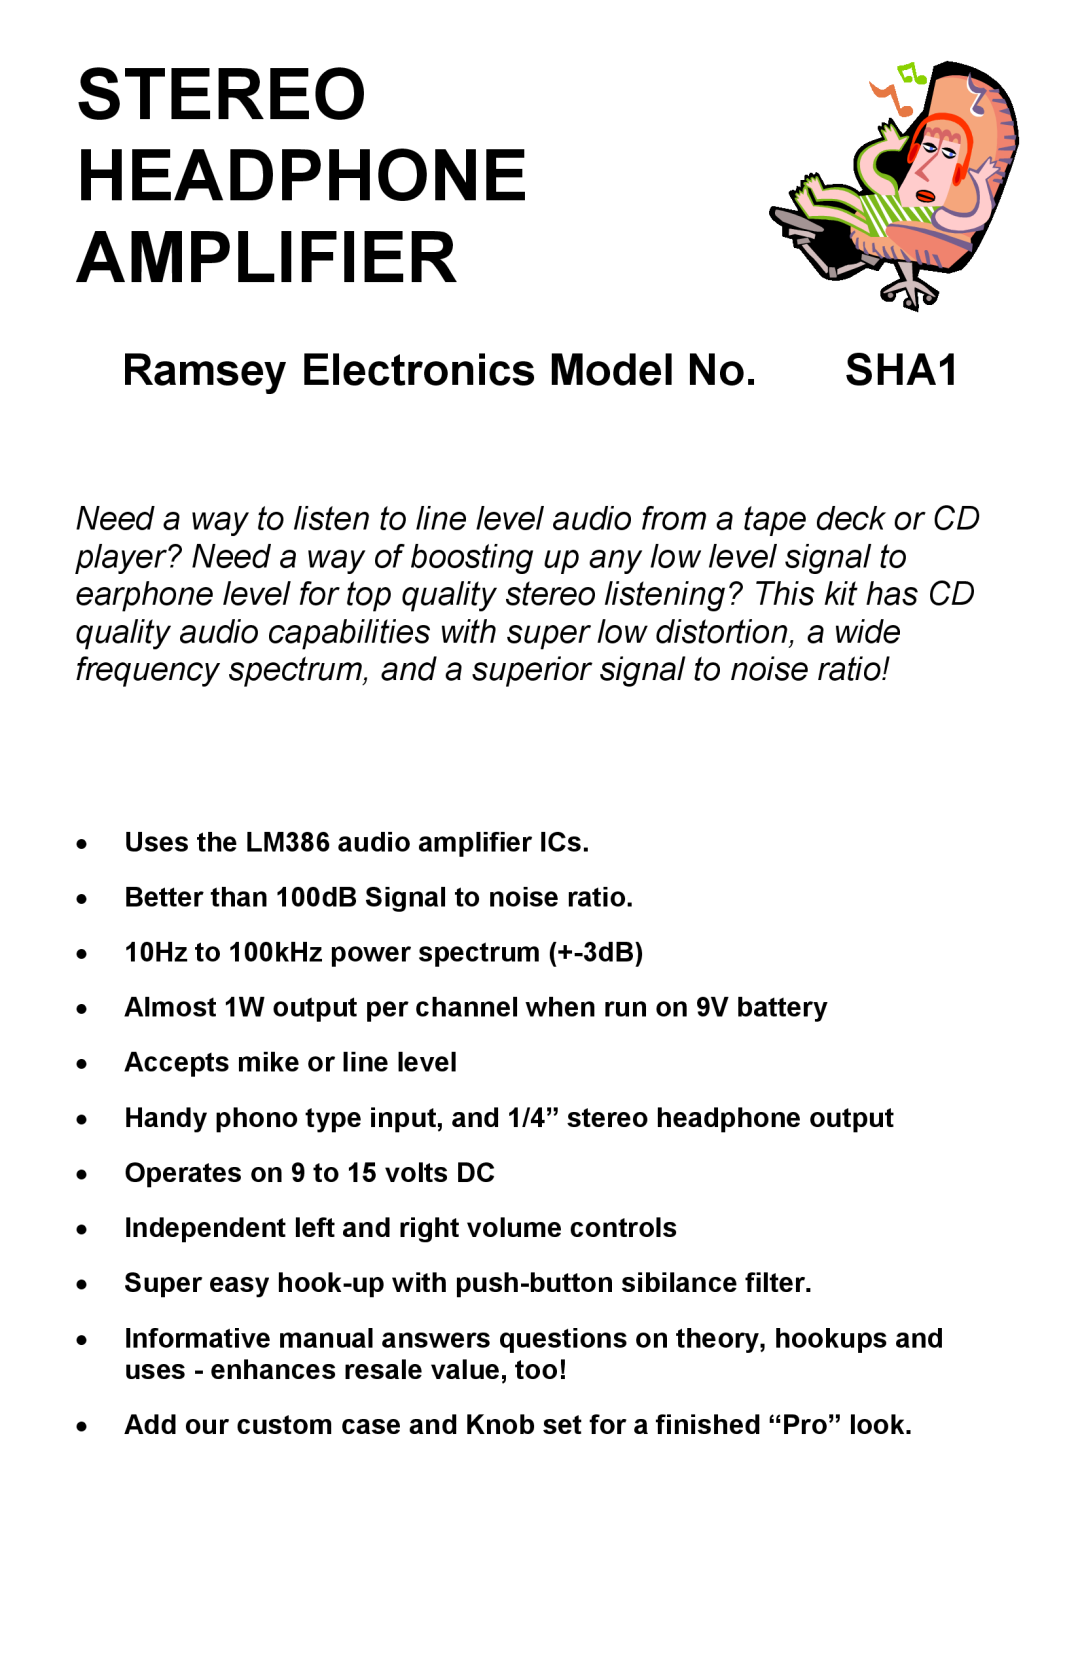 Ramsey Electronics SHA1 manual Stereo Headphone Amplifier, Ramsey Electronics Model No 